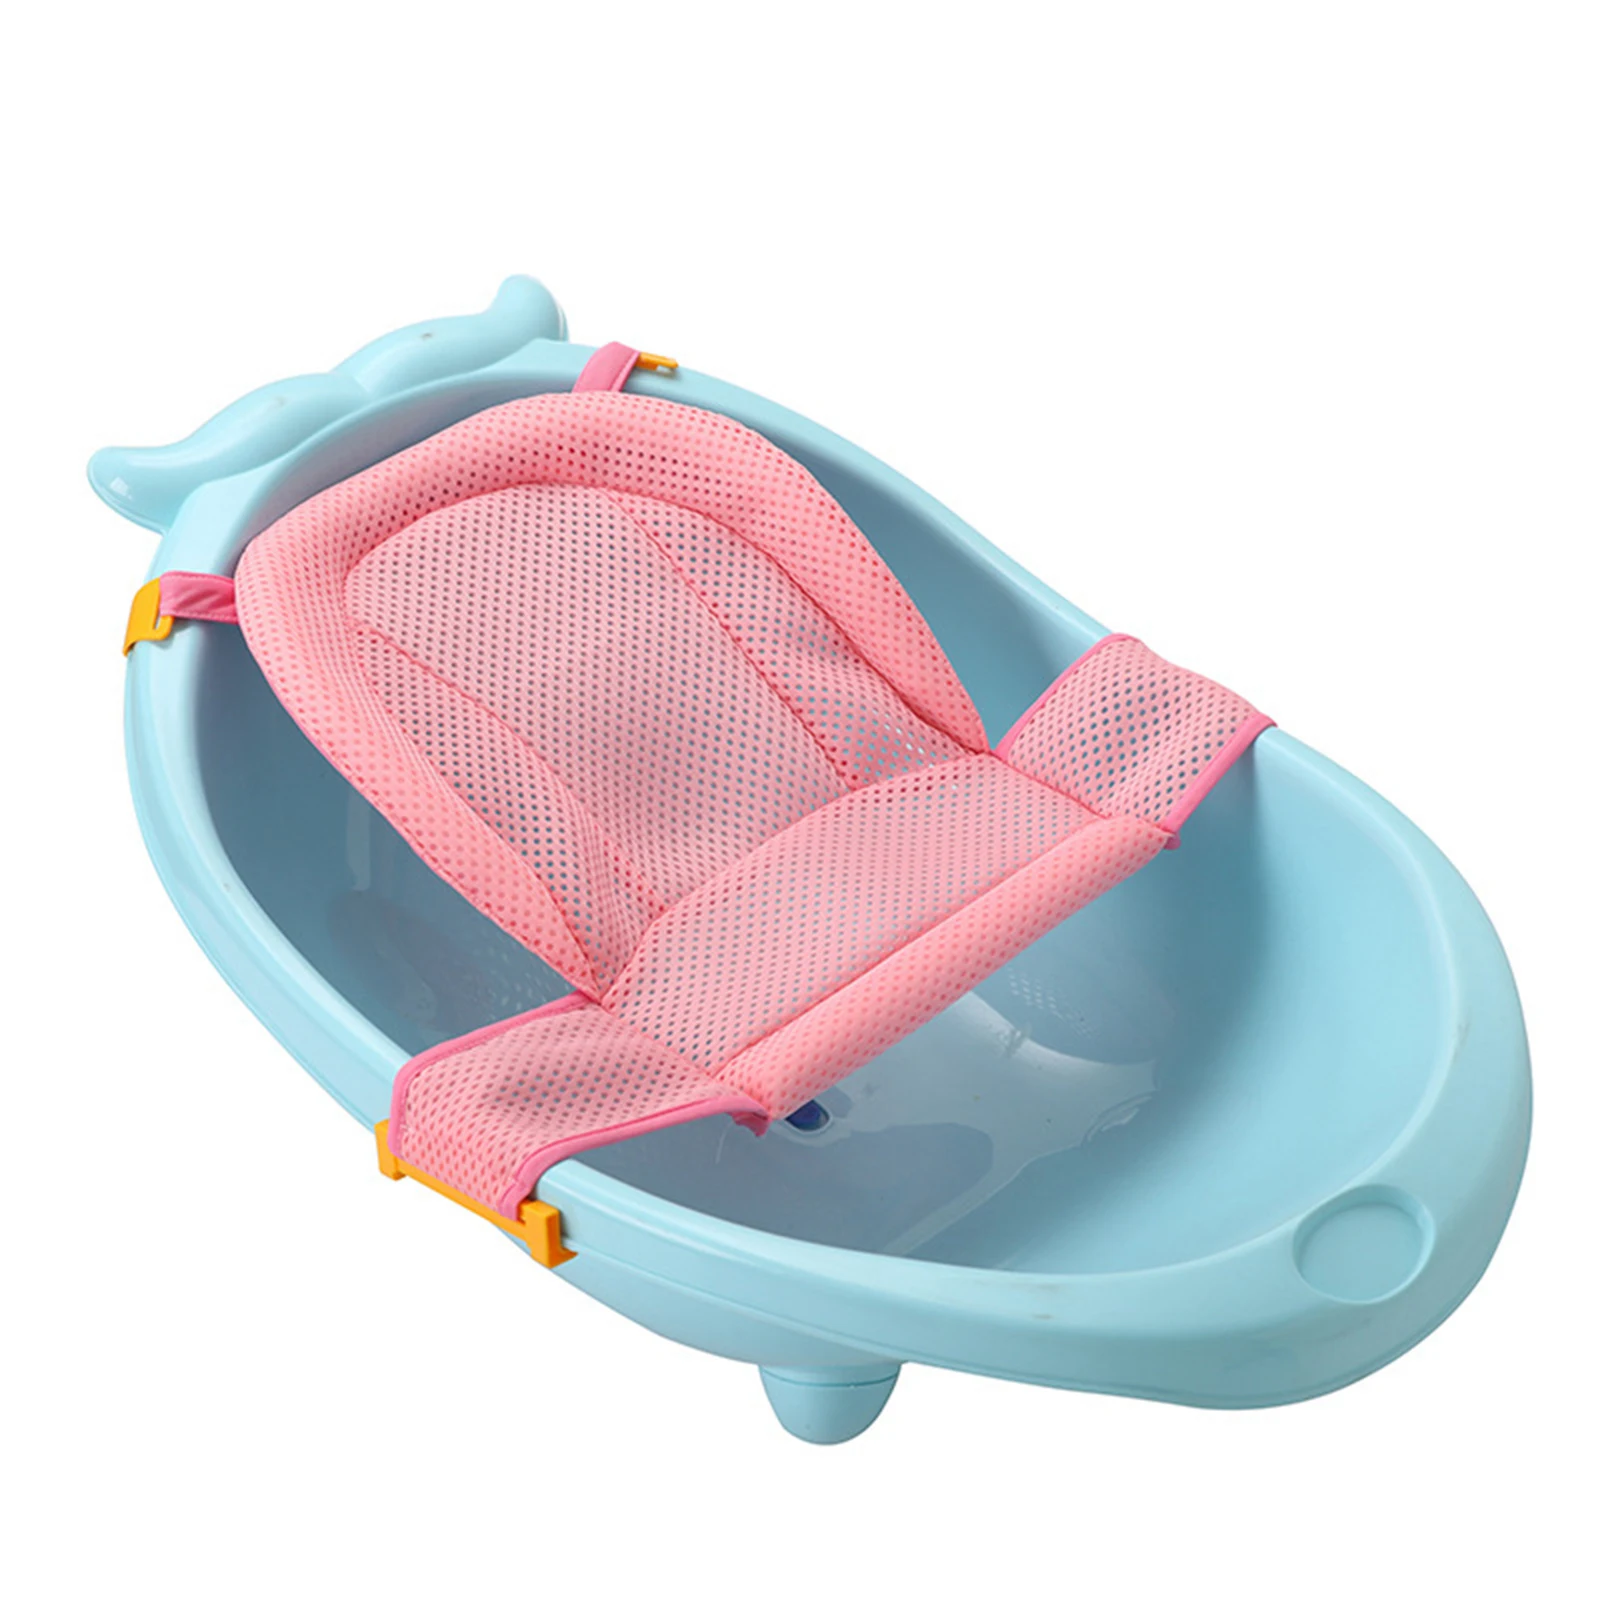 Portable Baby Bath Pad Ajustable Breathable Baby Bath Tub Pad Tub Shower Cushion Baby Bath Seat Support Mat for Bathroom Shower